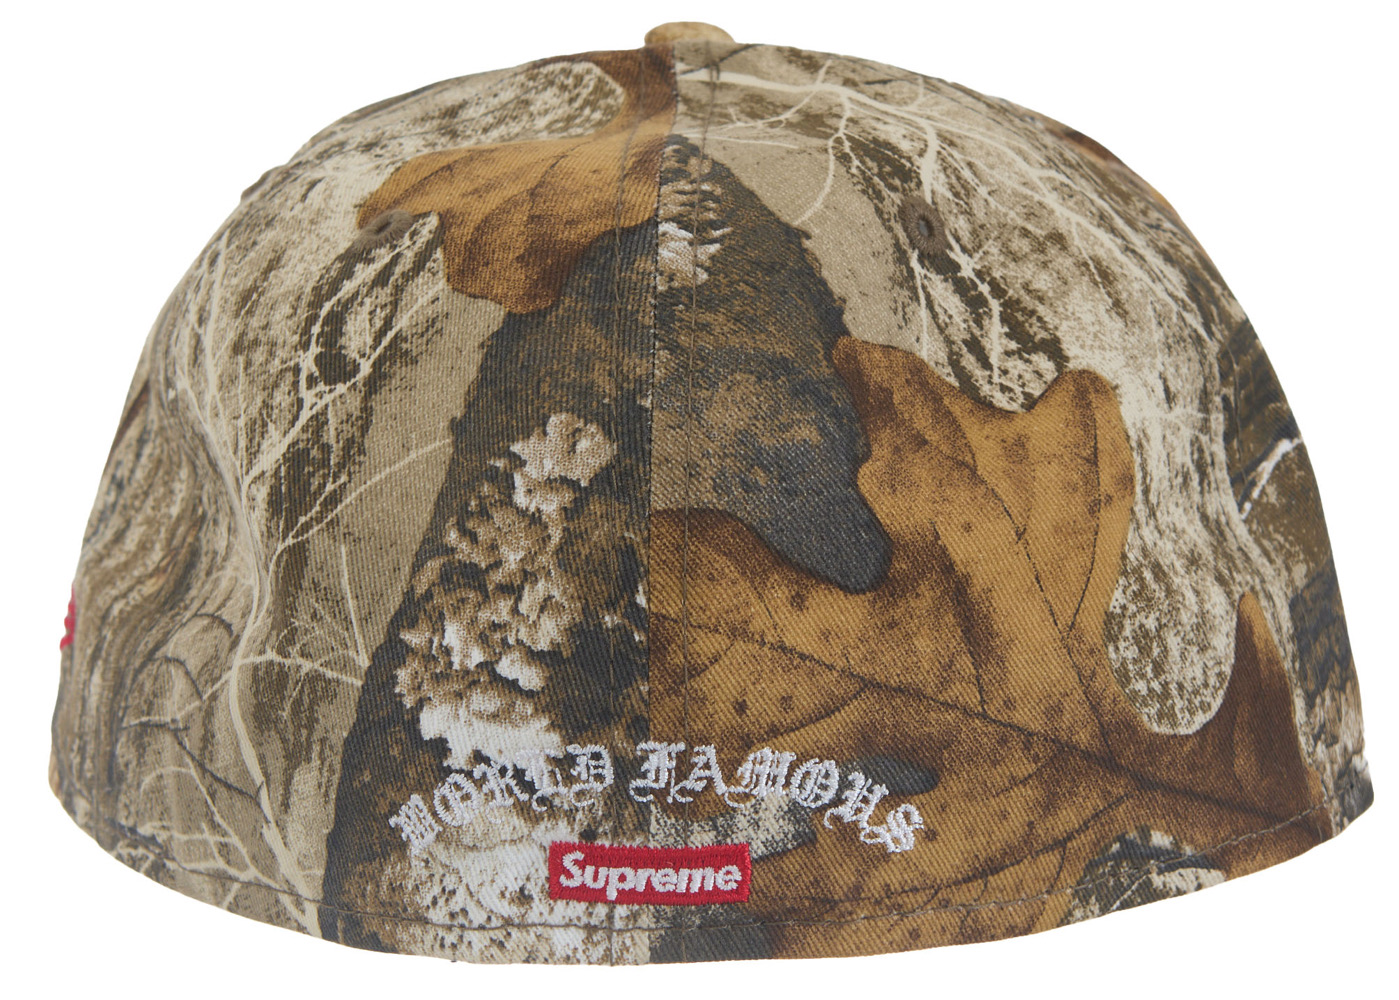 Supreme Gold Cross S Logo New Era Fitted Hat Realtree Camo